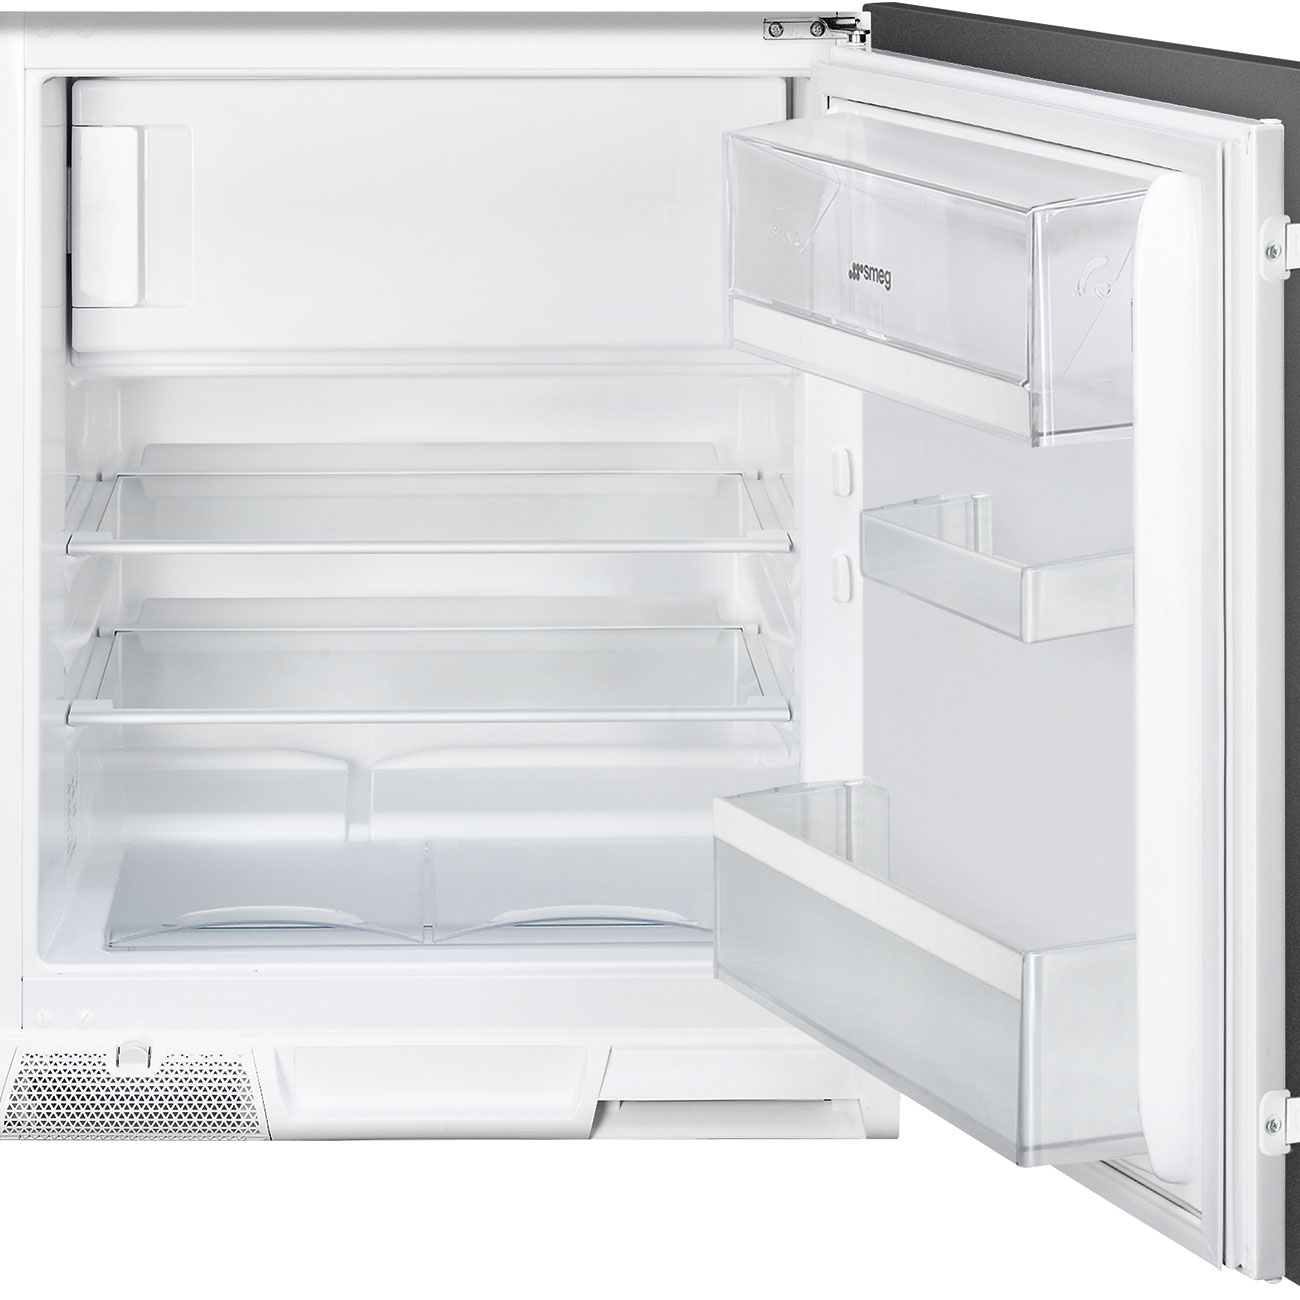 Under counter Built-in refrigerator - Smeg_1